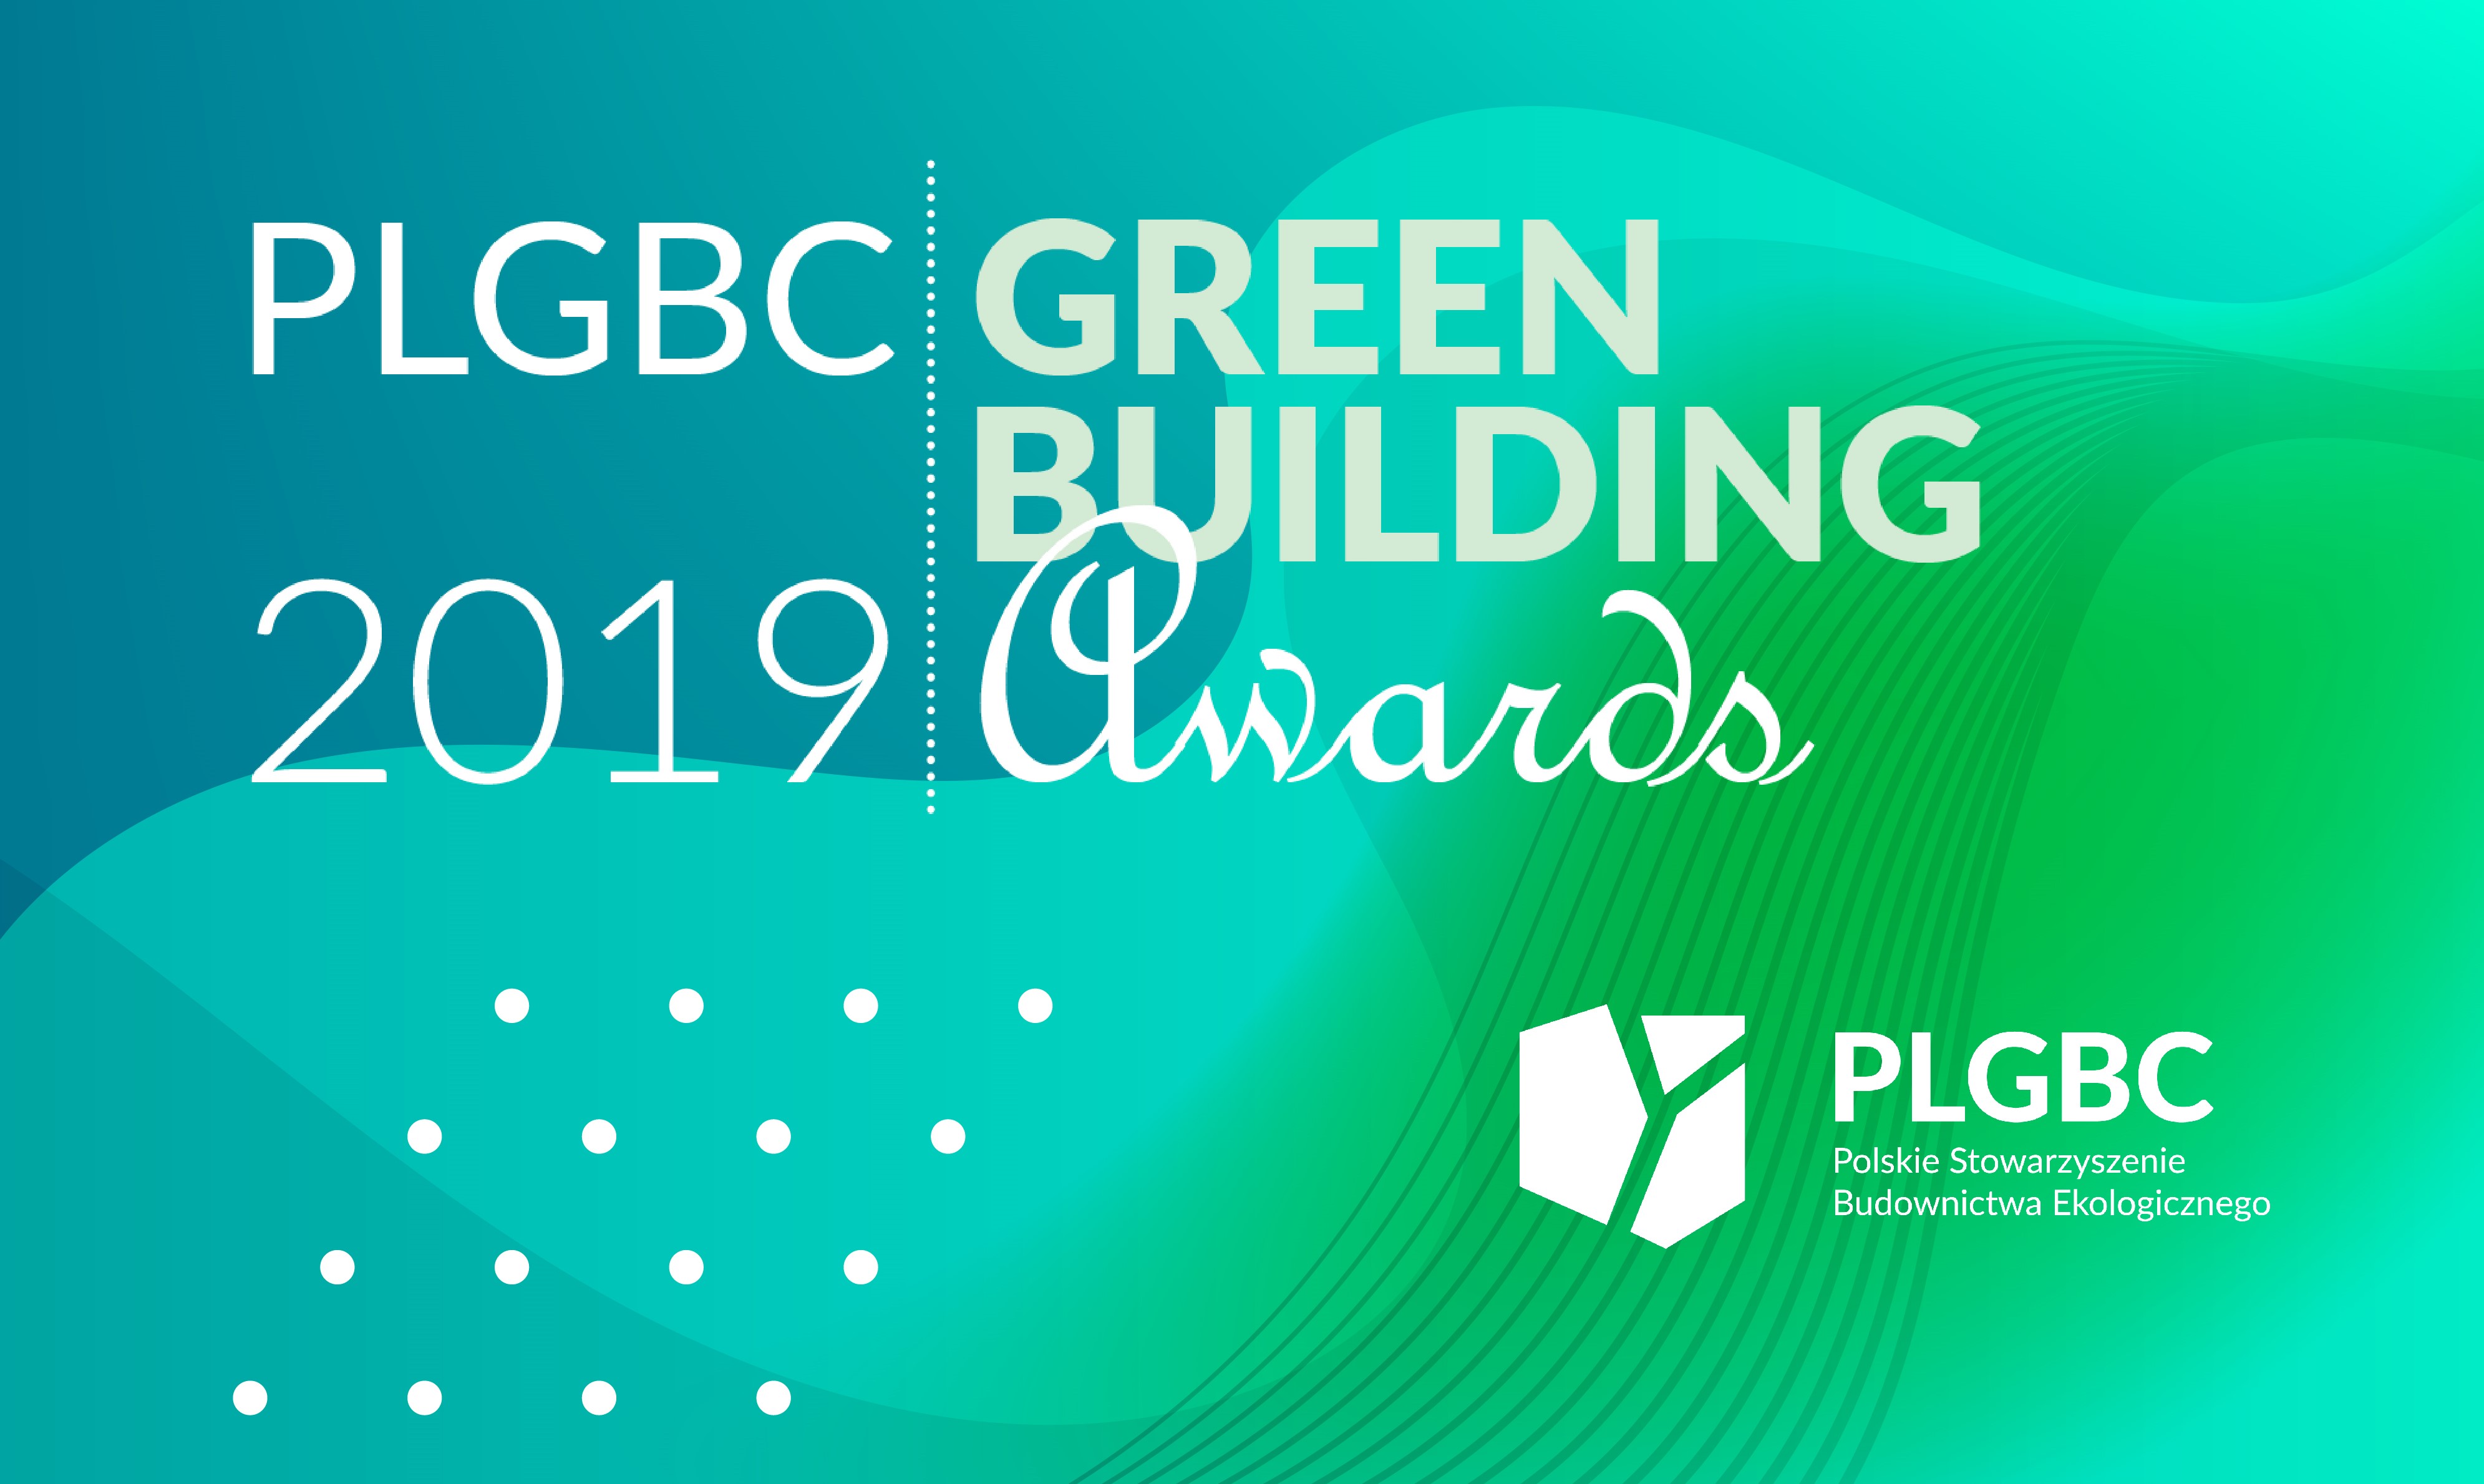 PLGBC GREEN BUILDING AWARDS 2019